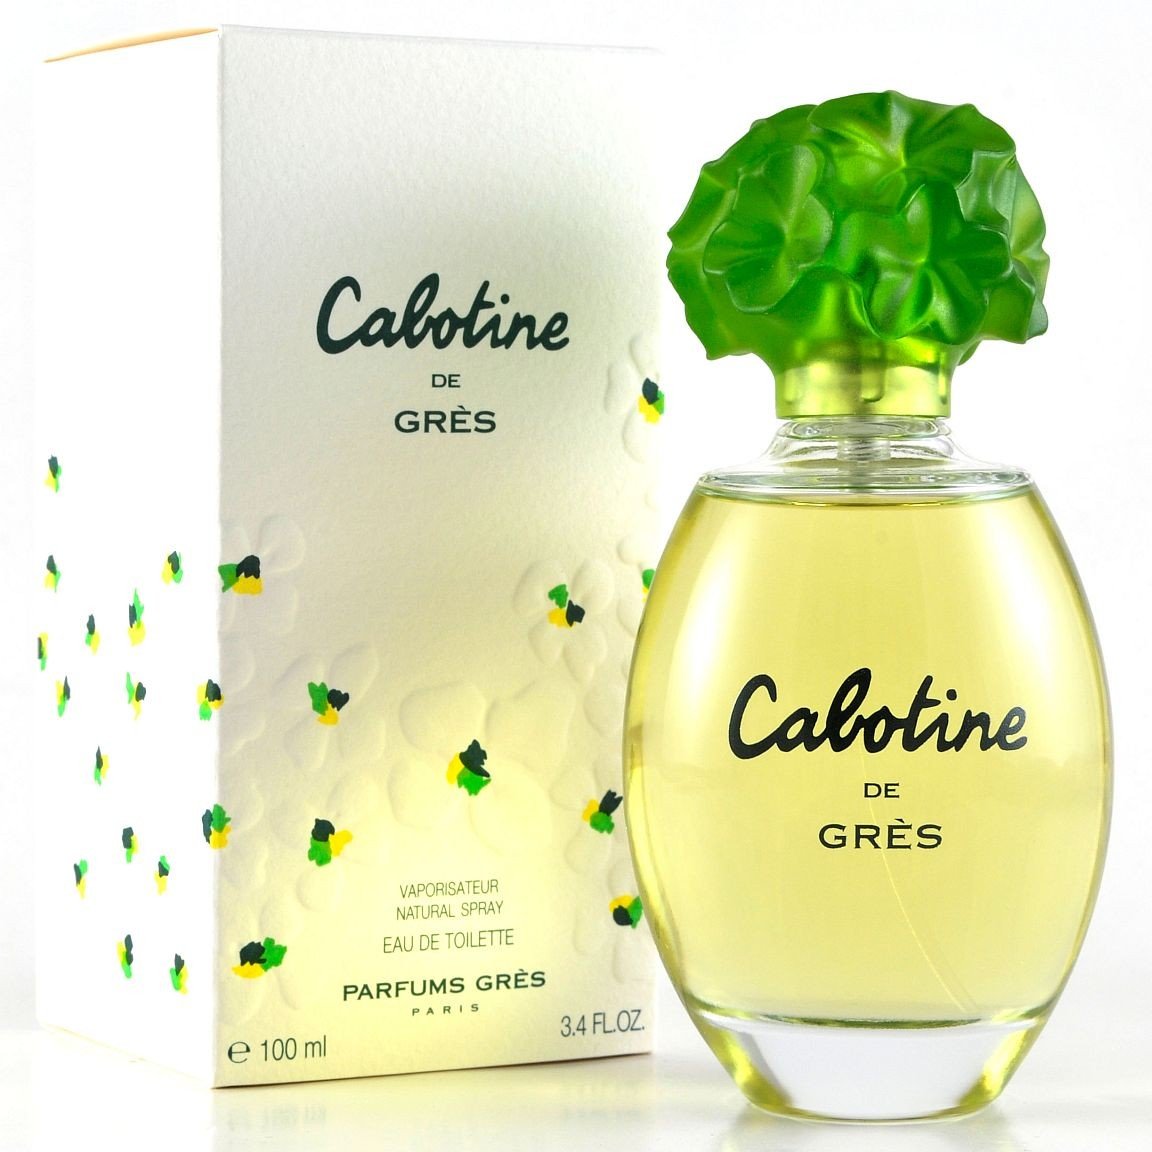 Cabotine De Gres Perfume - 100 ml - Perfume for women Cabotine ✔Original product